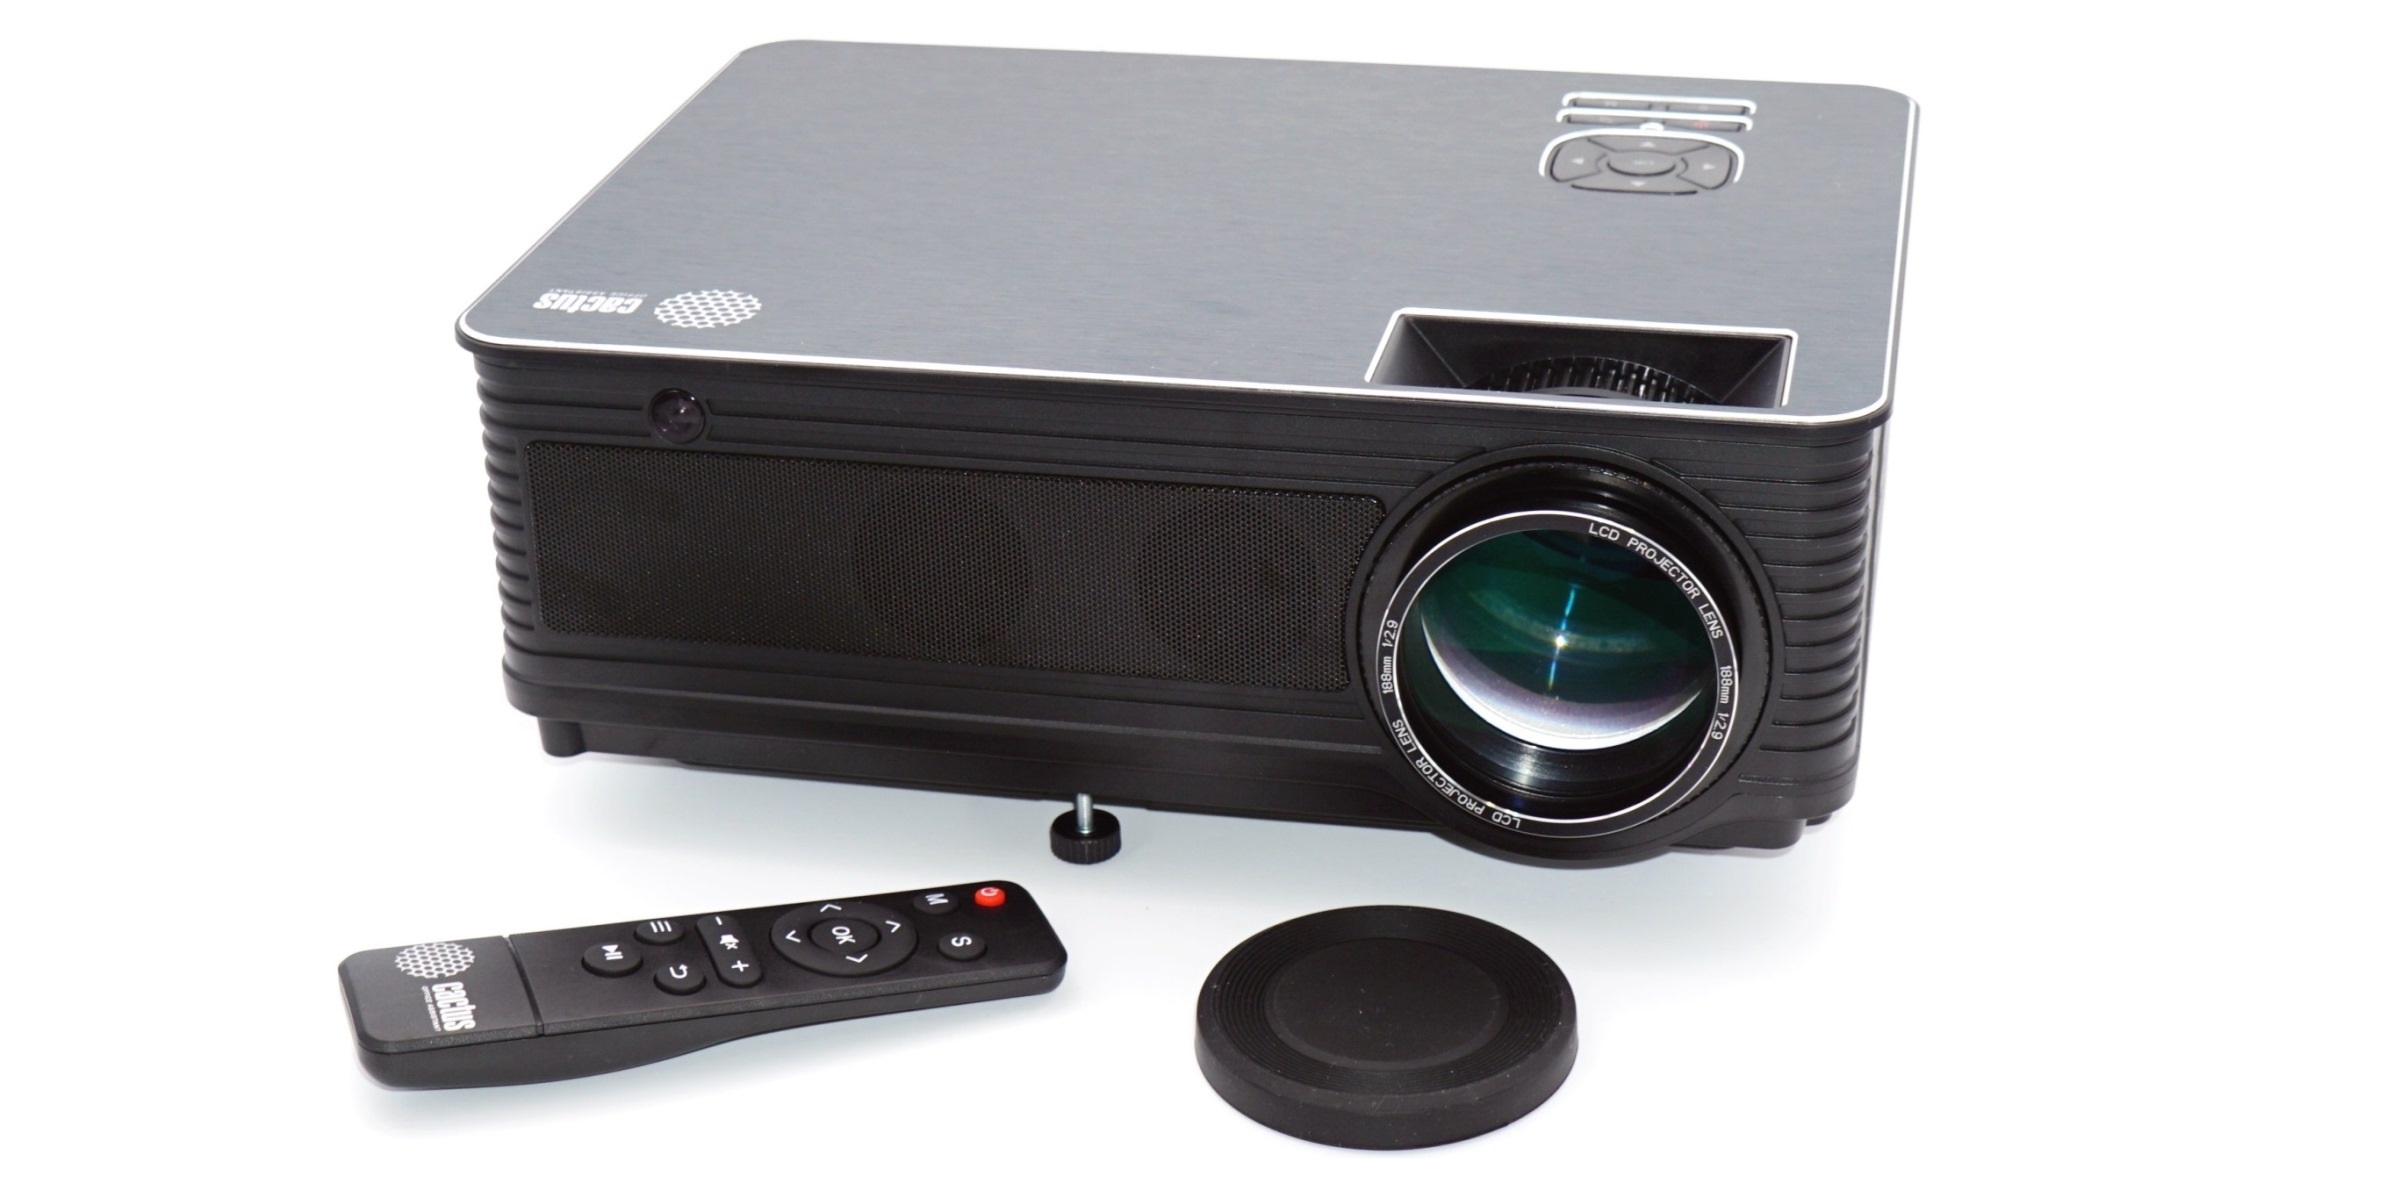 Филипс домашний проектор Full-HD с Android TV модель NPX643 NeoPix Ultra2 TV.